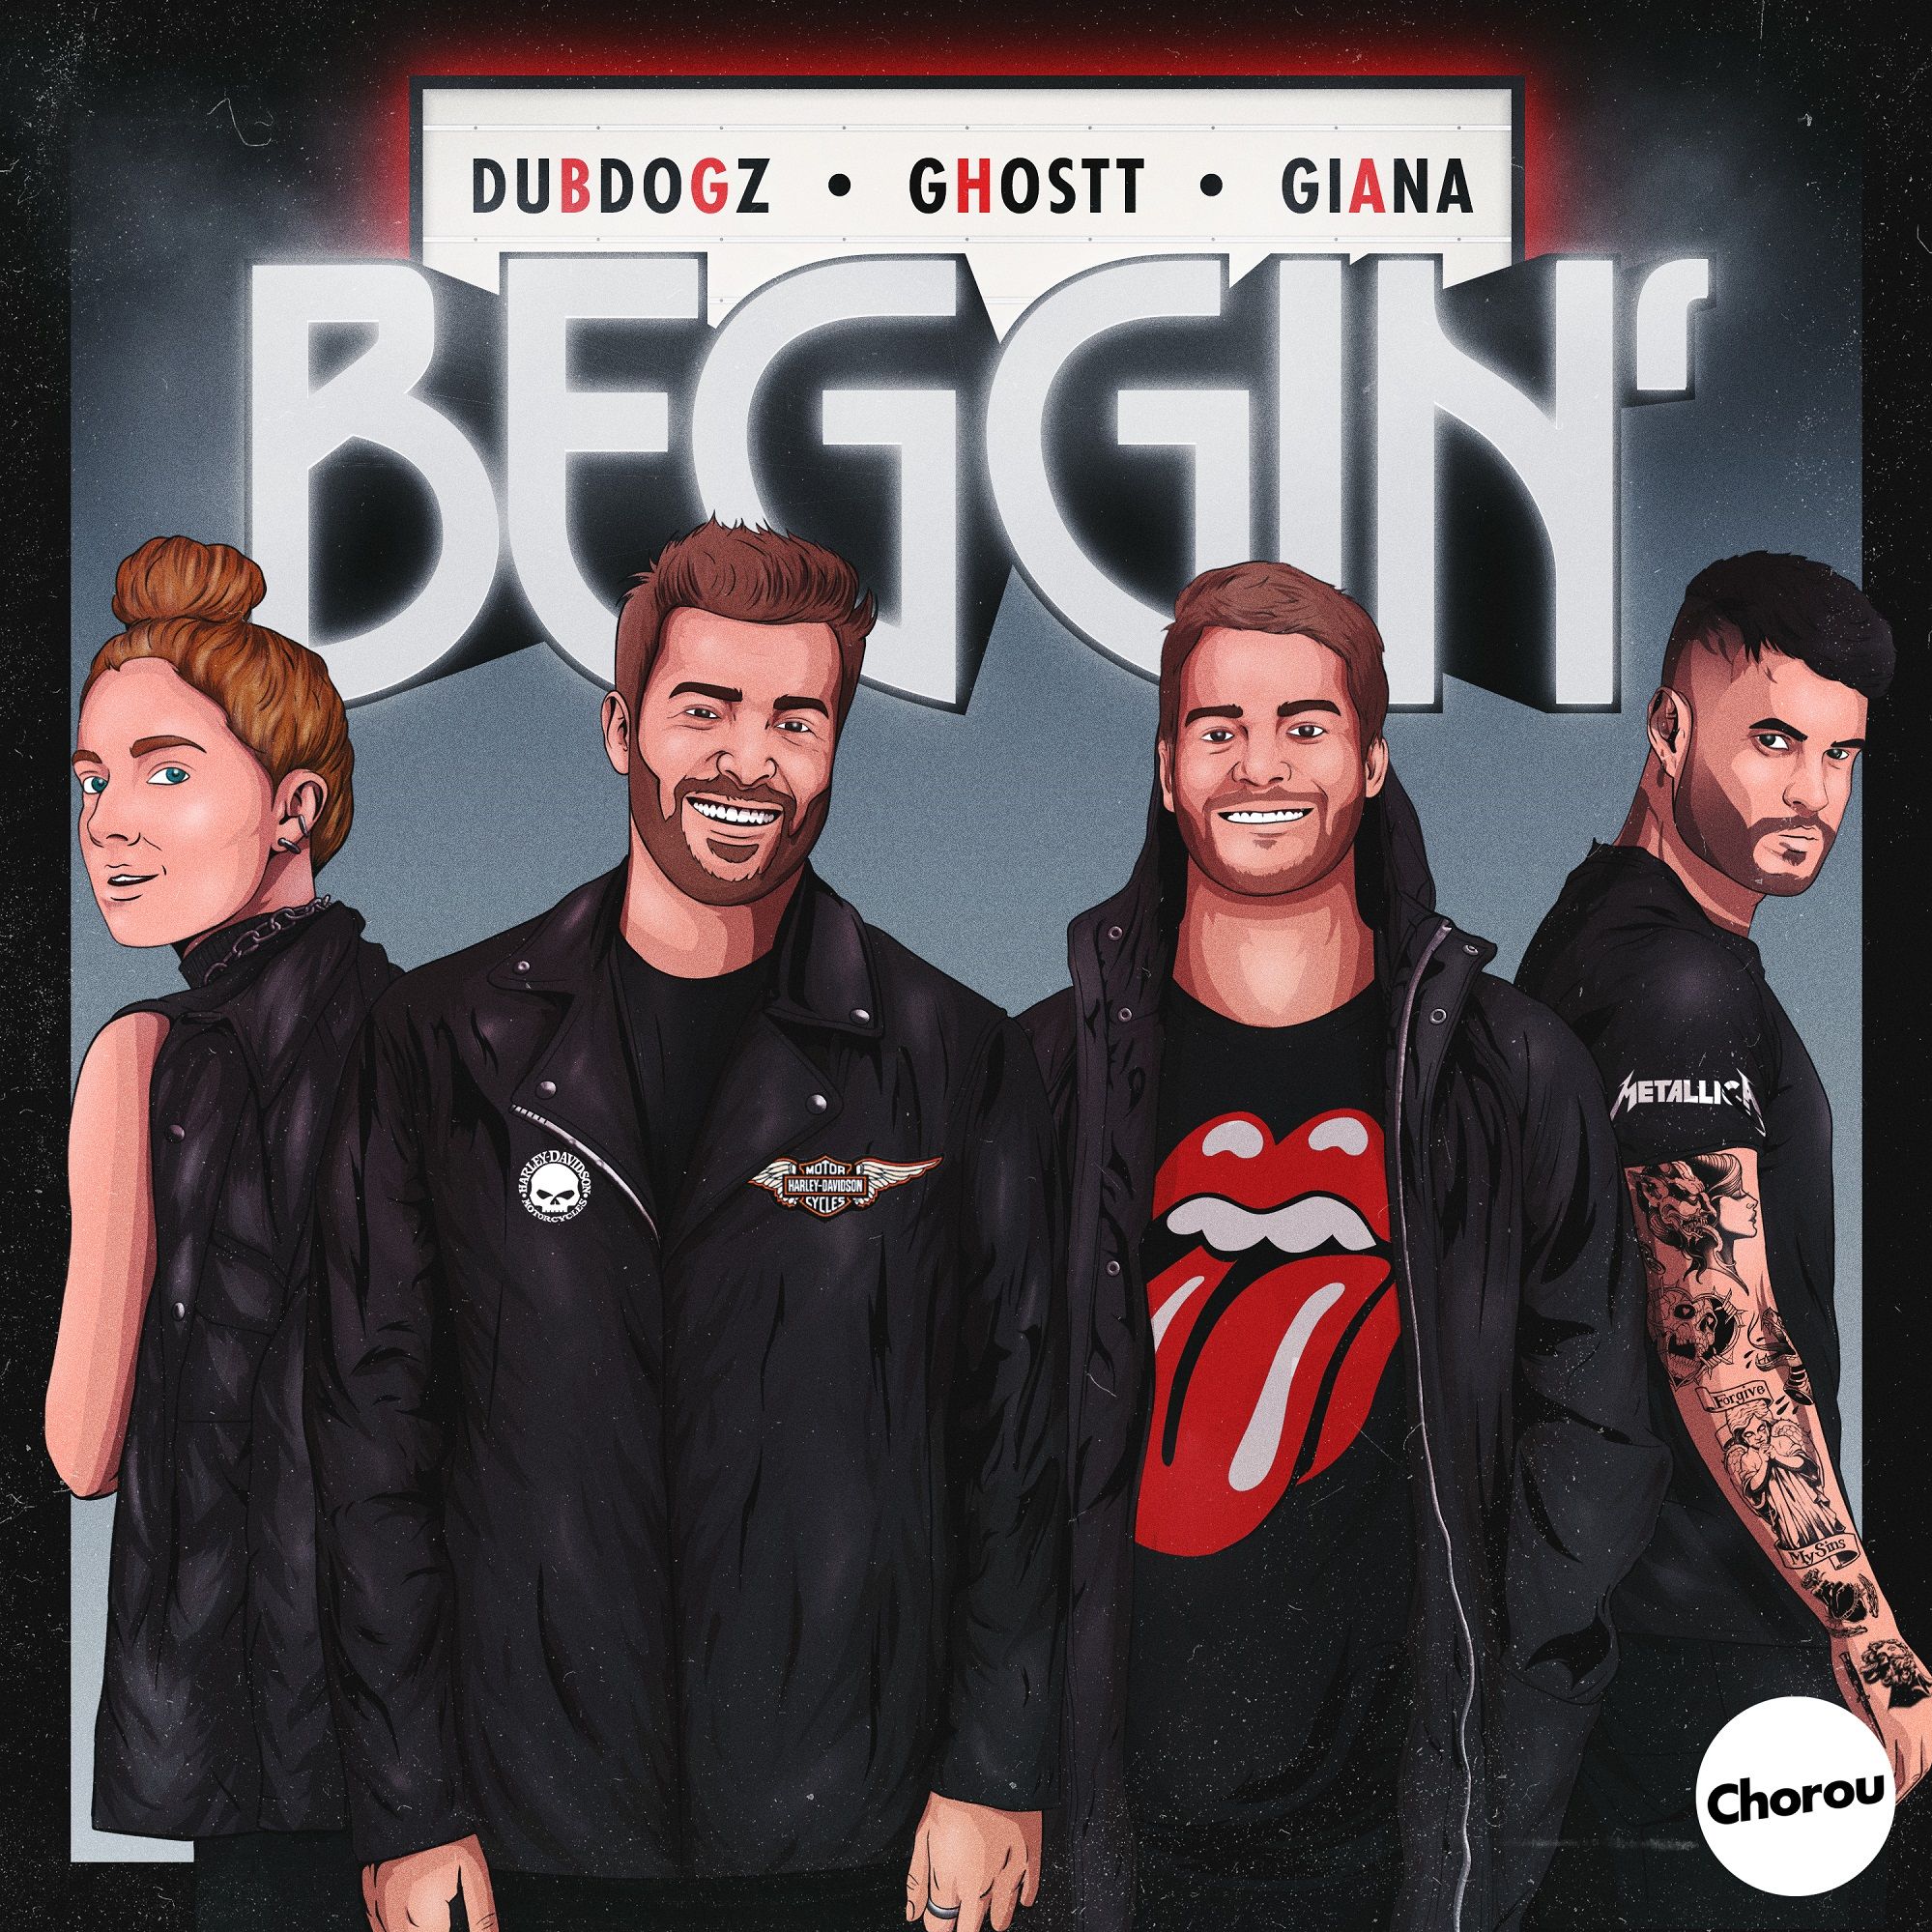 Nedlasting Dubdogz, Ghostt - Beggin' (feat. Giana) [Chorou Records]